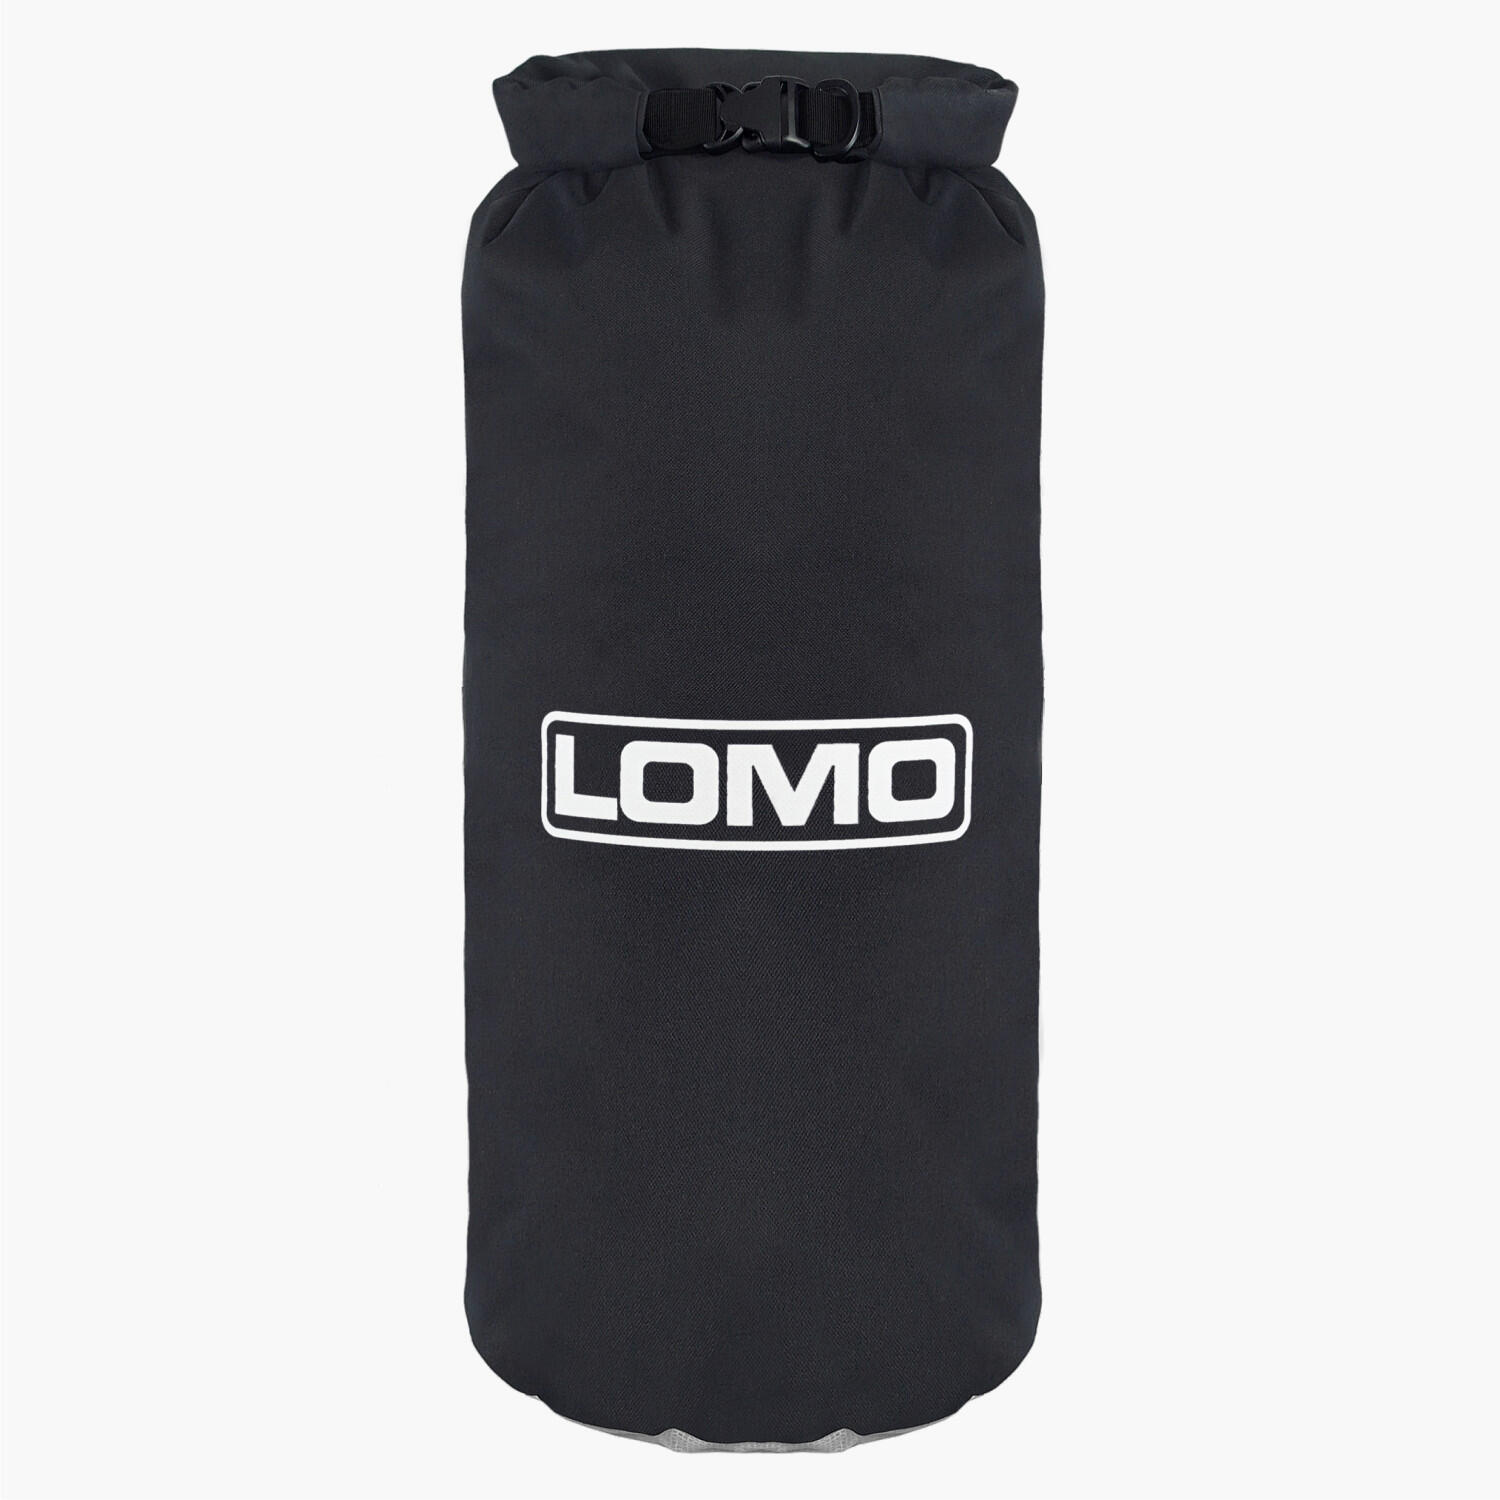 Lomo 20L Dry Bag - Black with Window 4/7